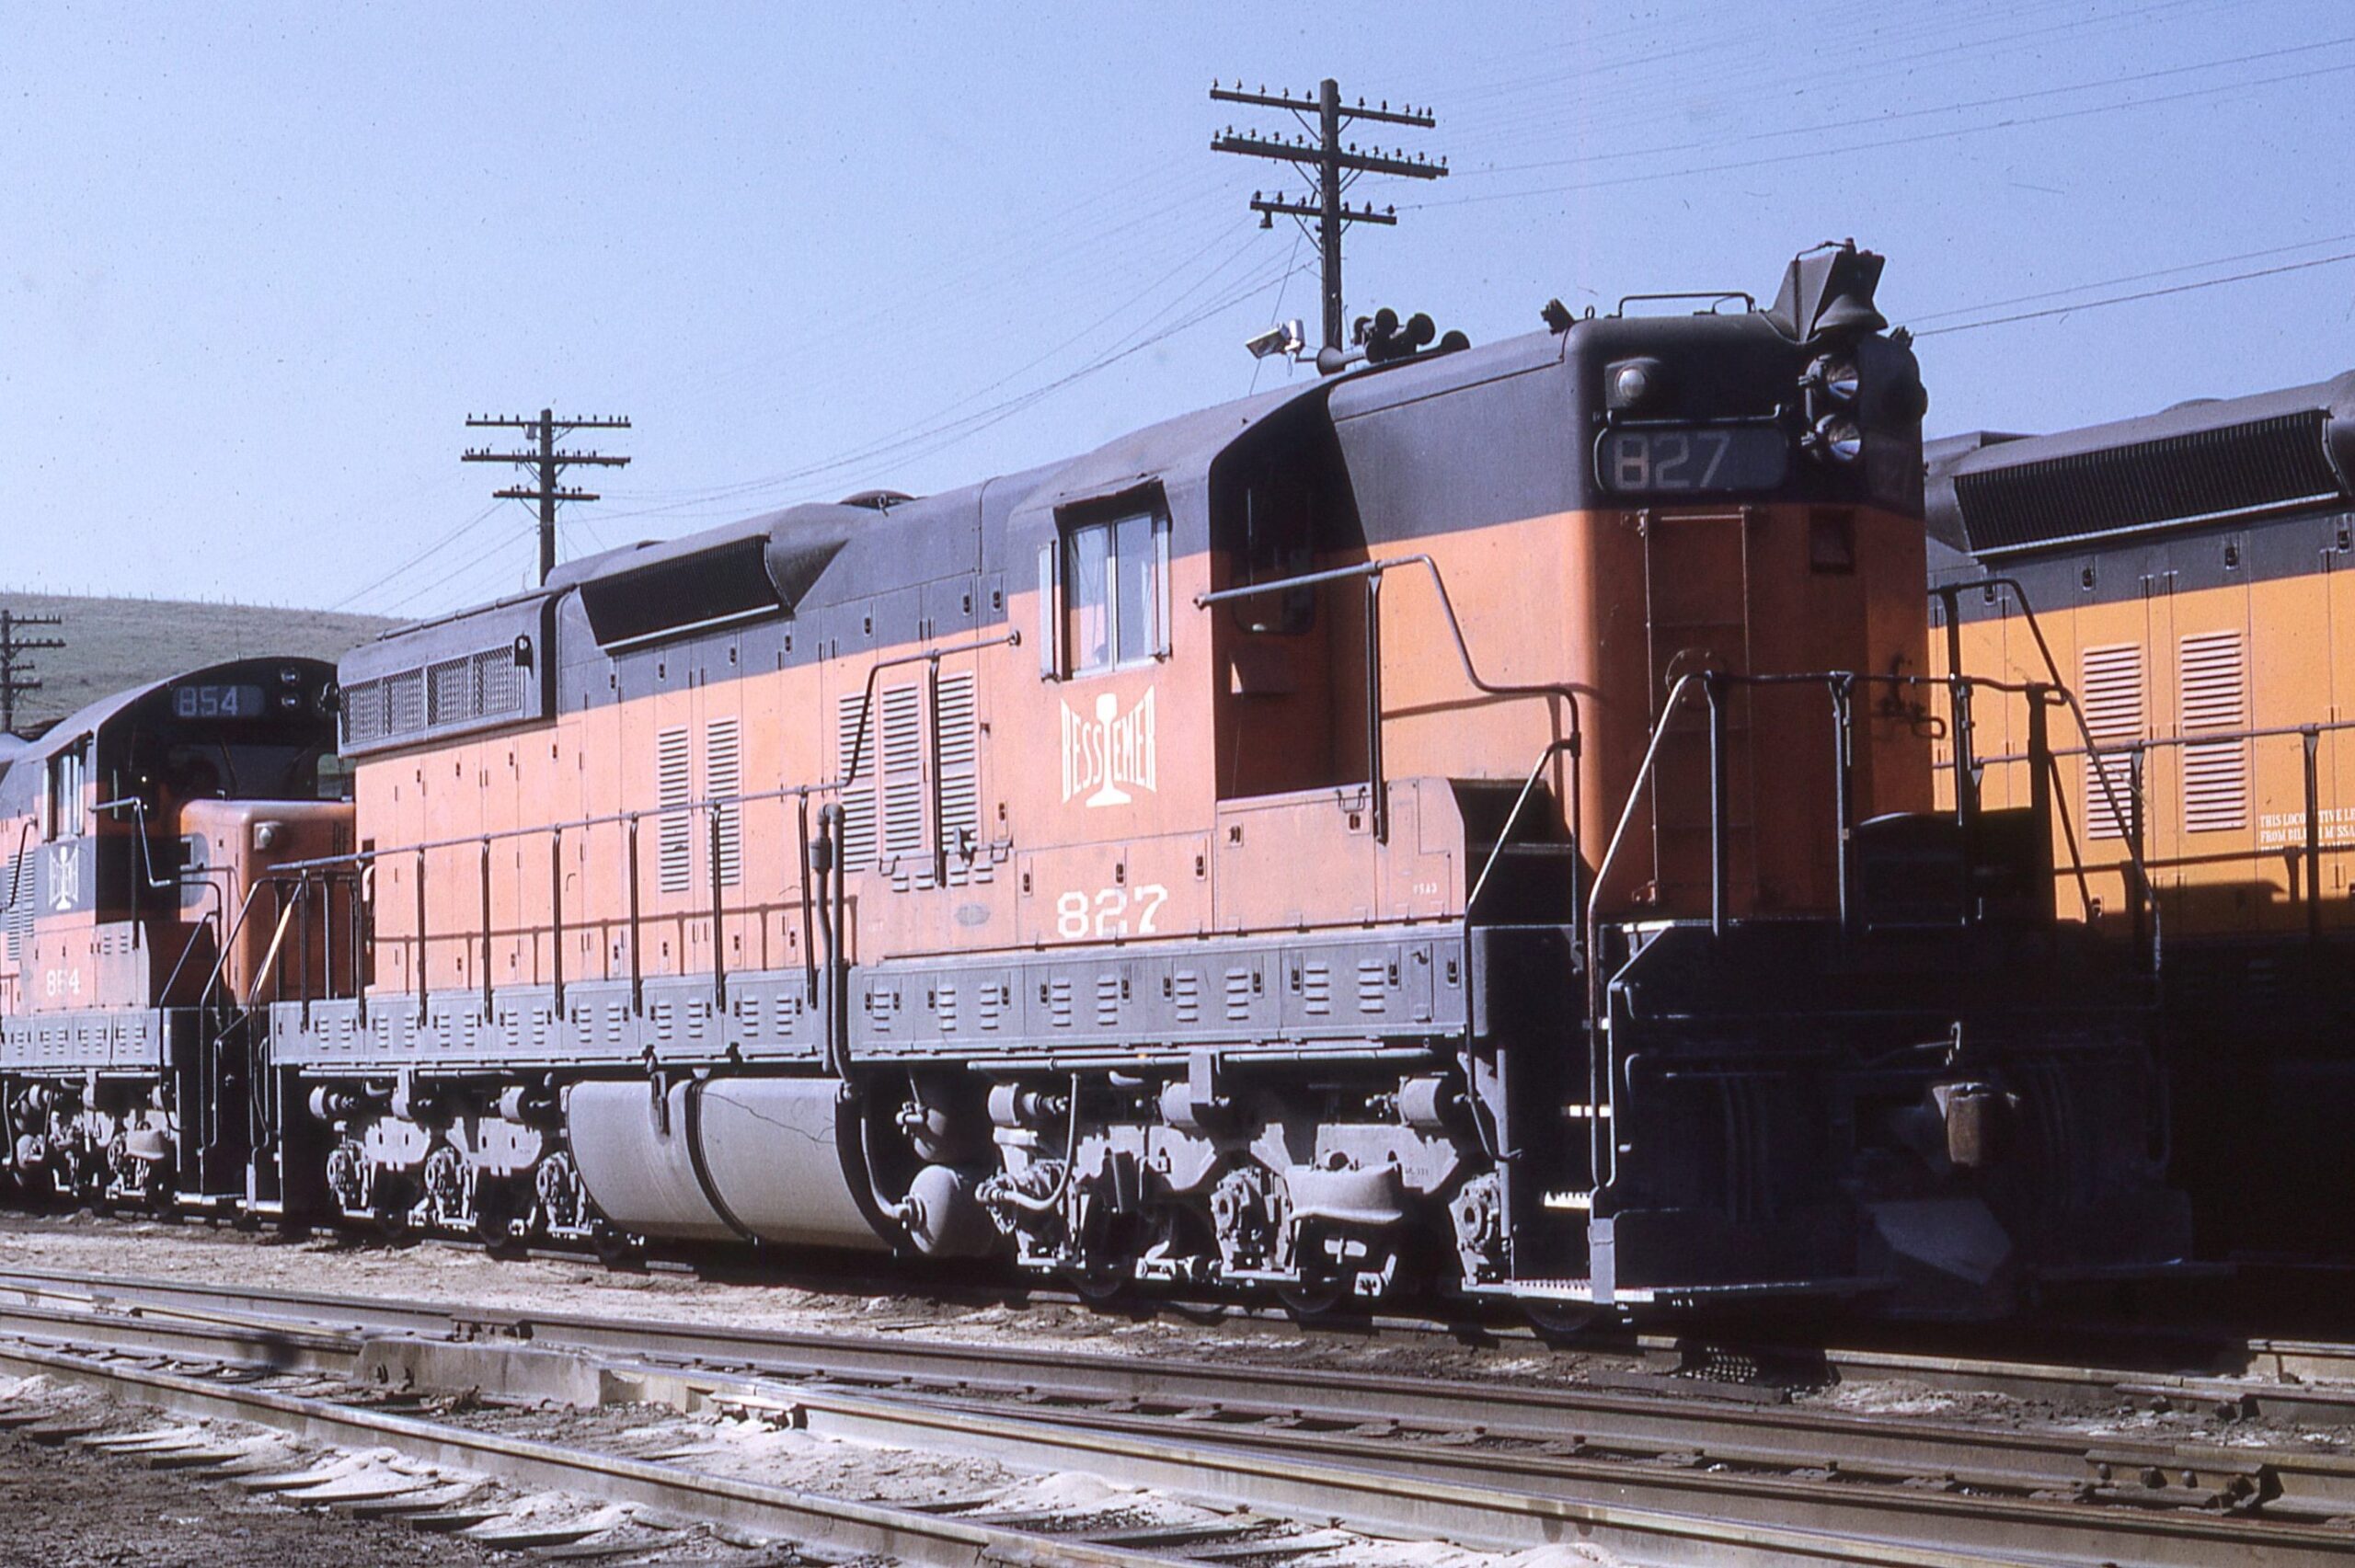 Bessemer and Lake Erie Railroad | North Bessemer, Pennsylvania | EMD SD9 #827 diesel-electric locomotive | October 15, 1967 | Jack DeRosset photograph | Morning Sun Books Collection